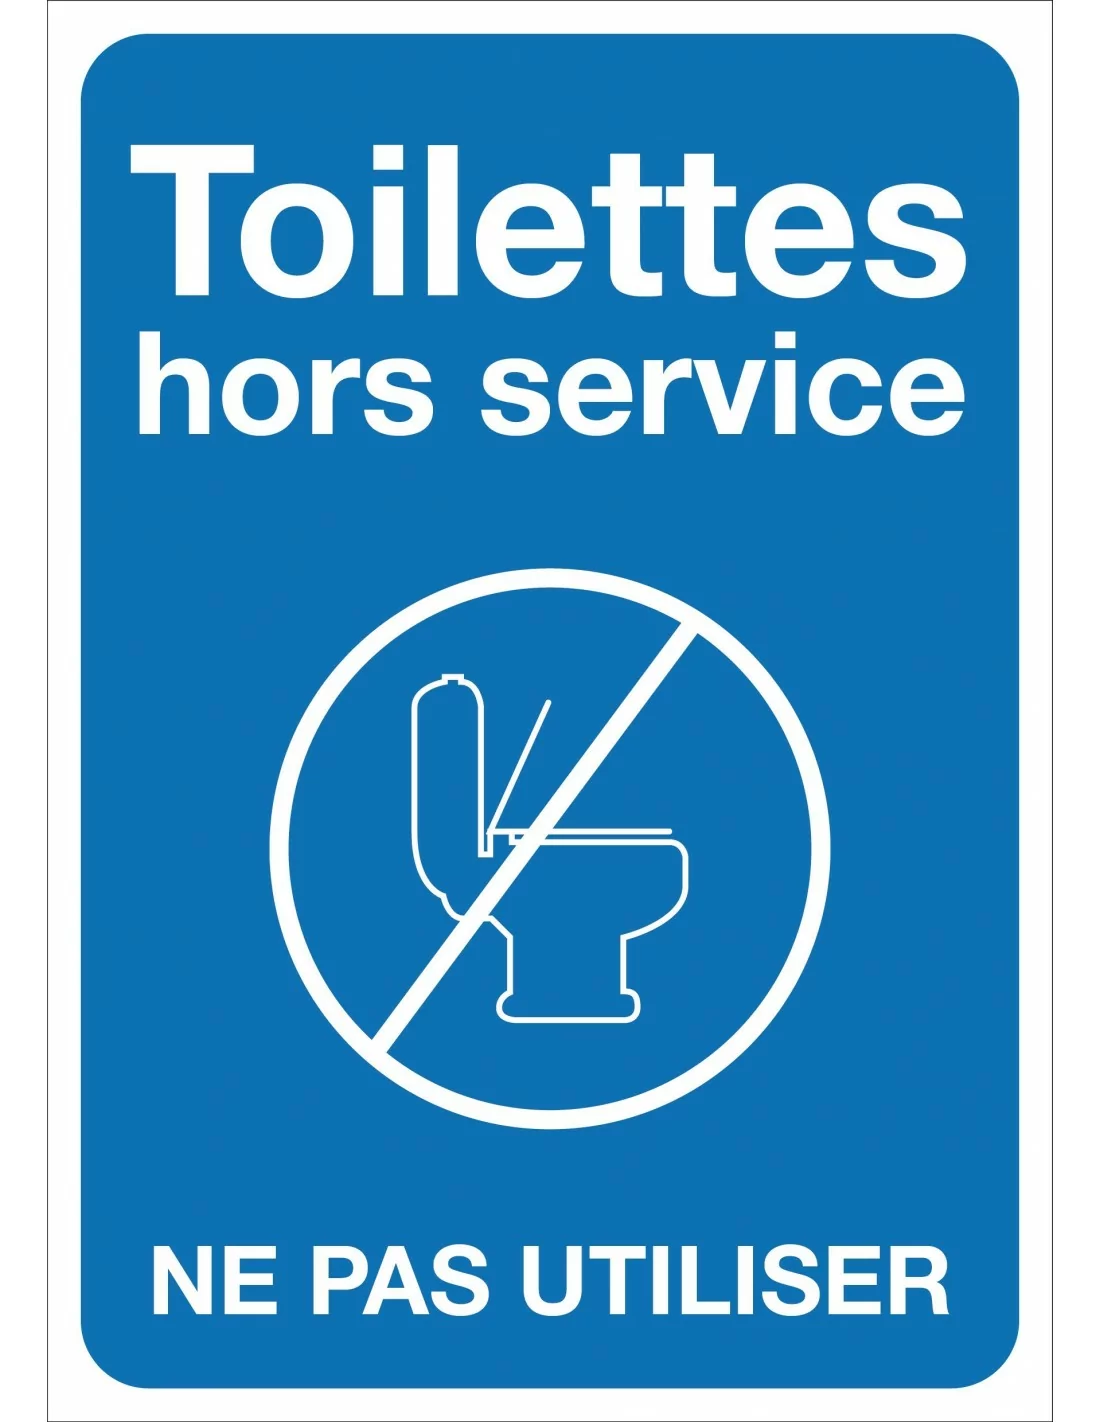 Toilettes Hors Service